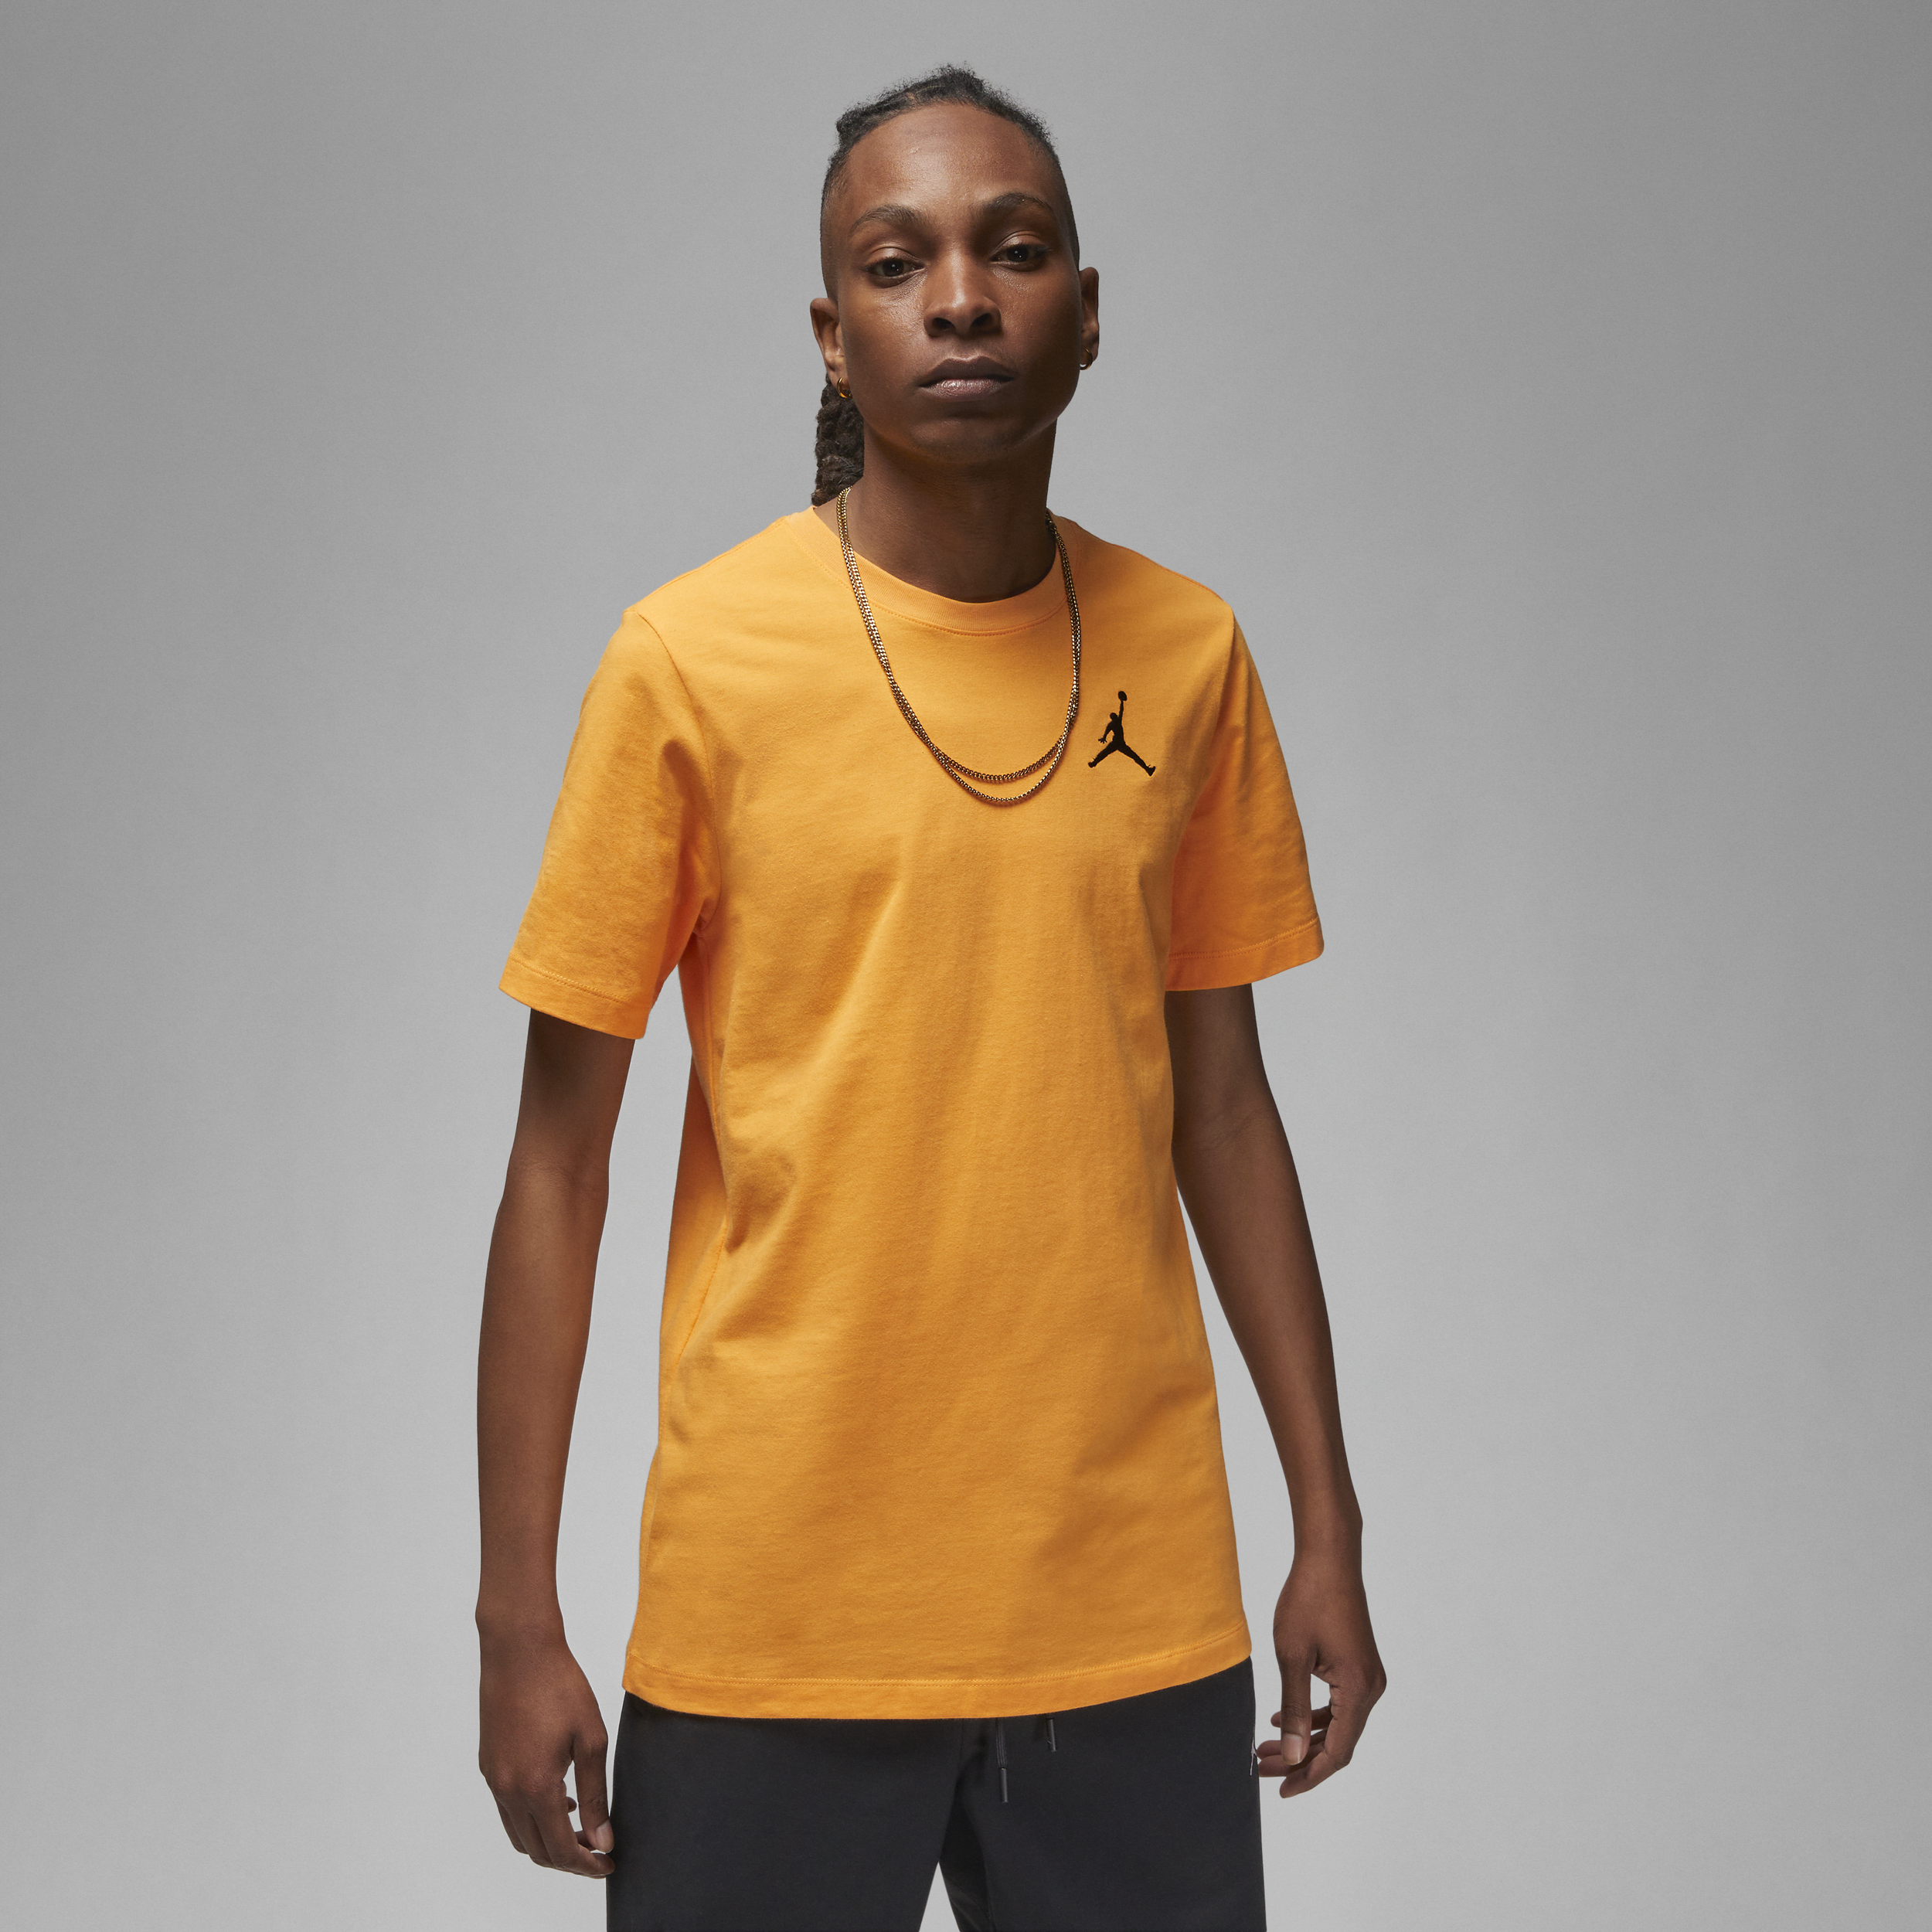 Jordan Jumpman Camiseta de manga corta - Hombre - Amarillo